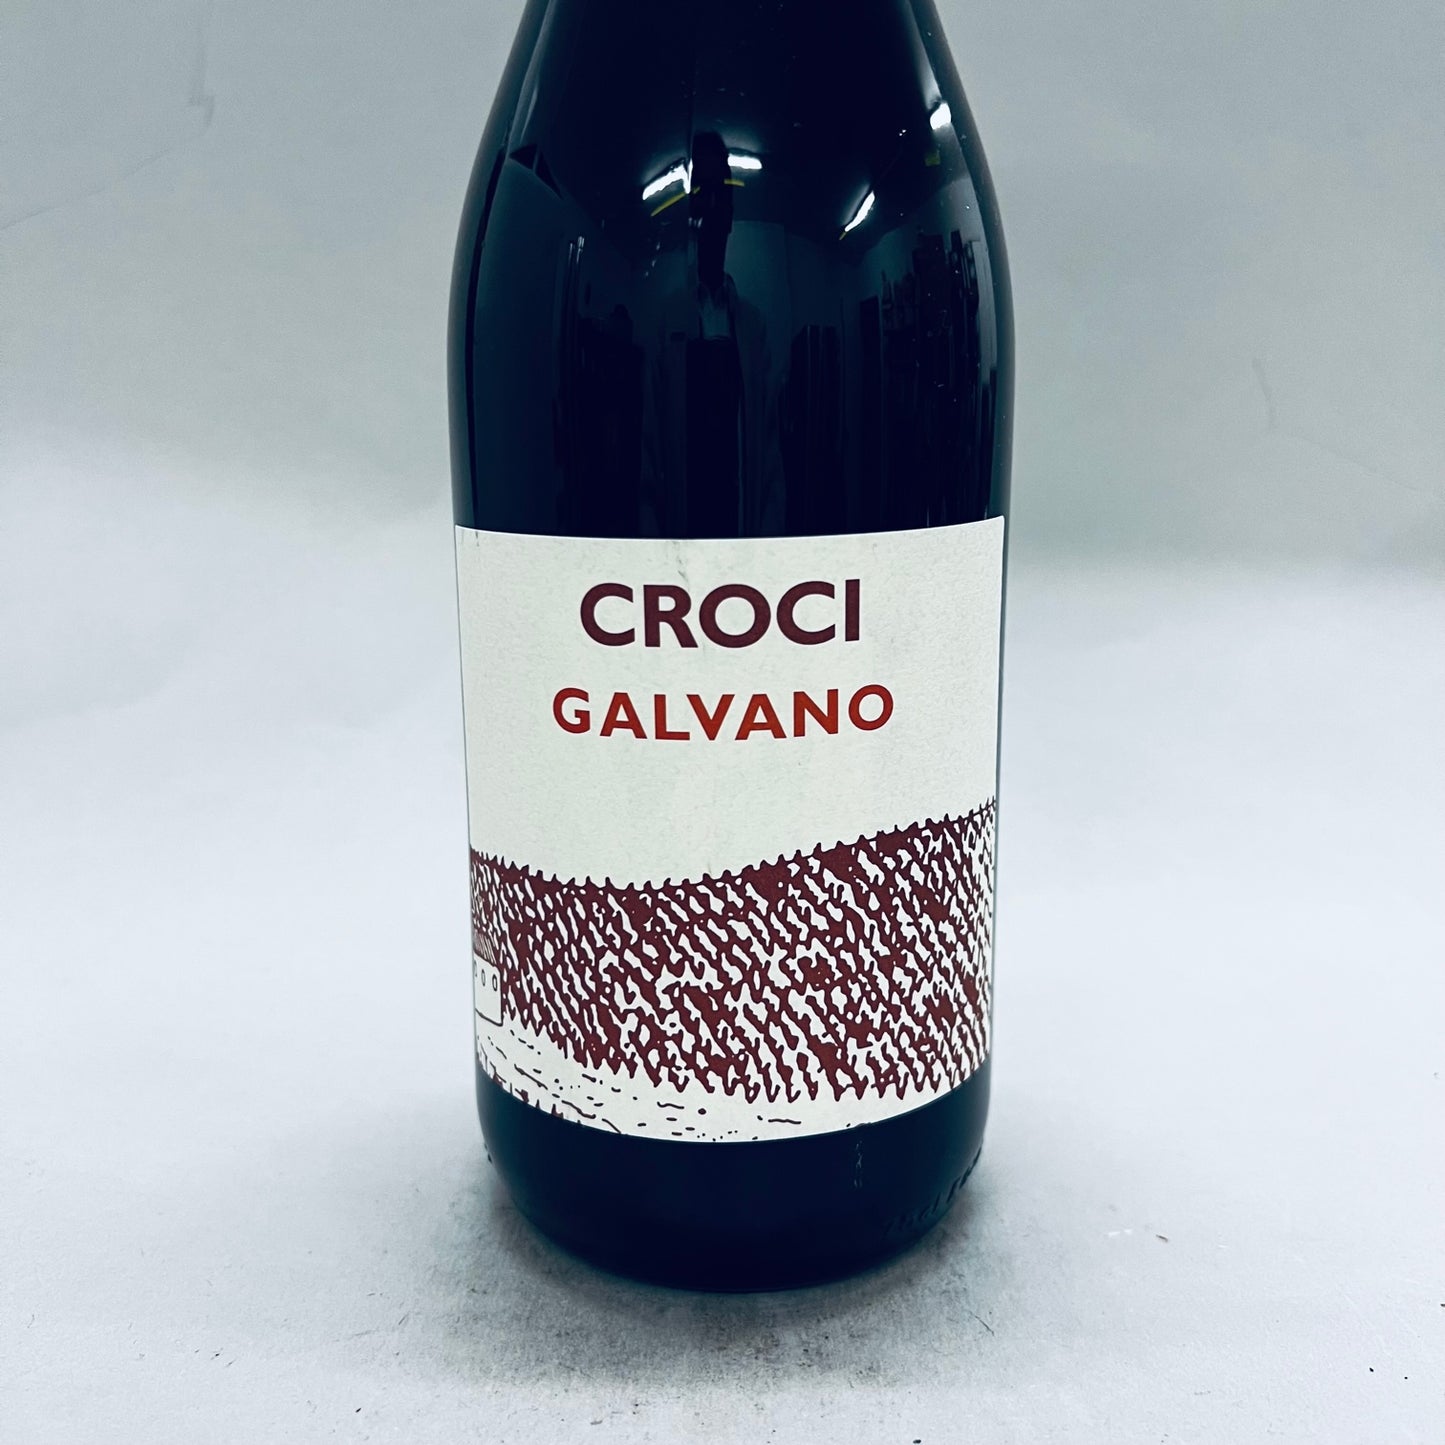 2019 Croci Galvano